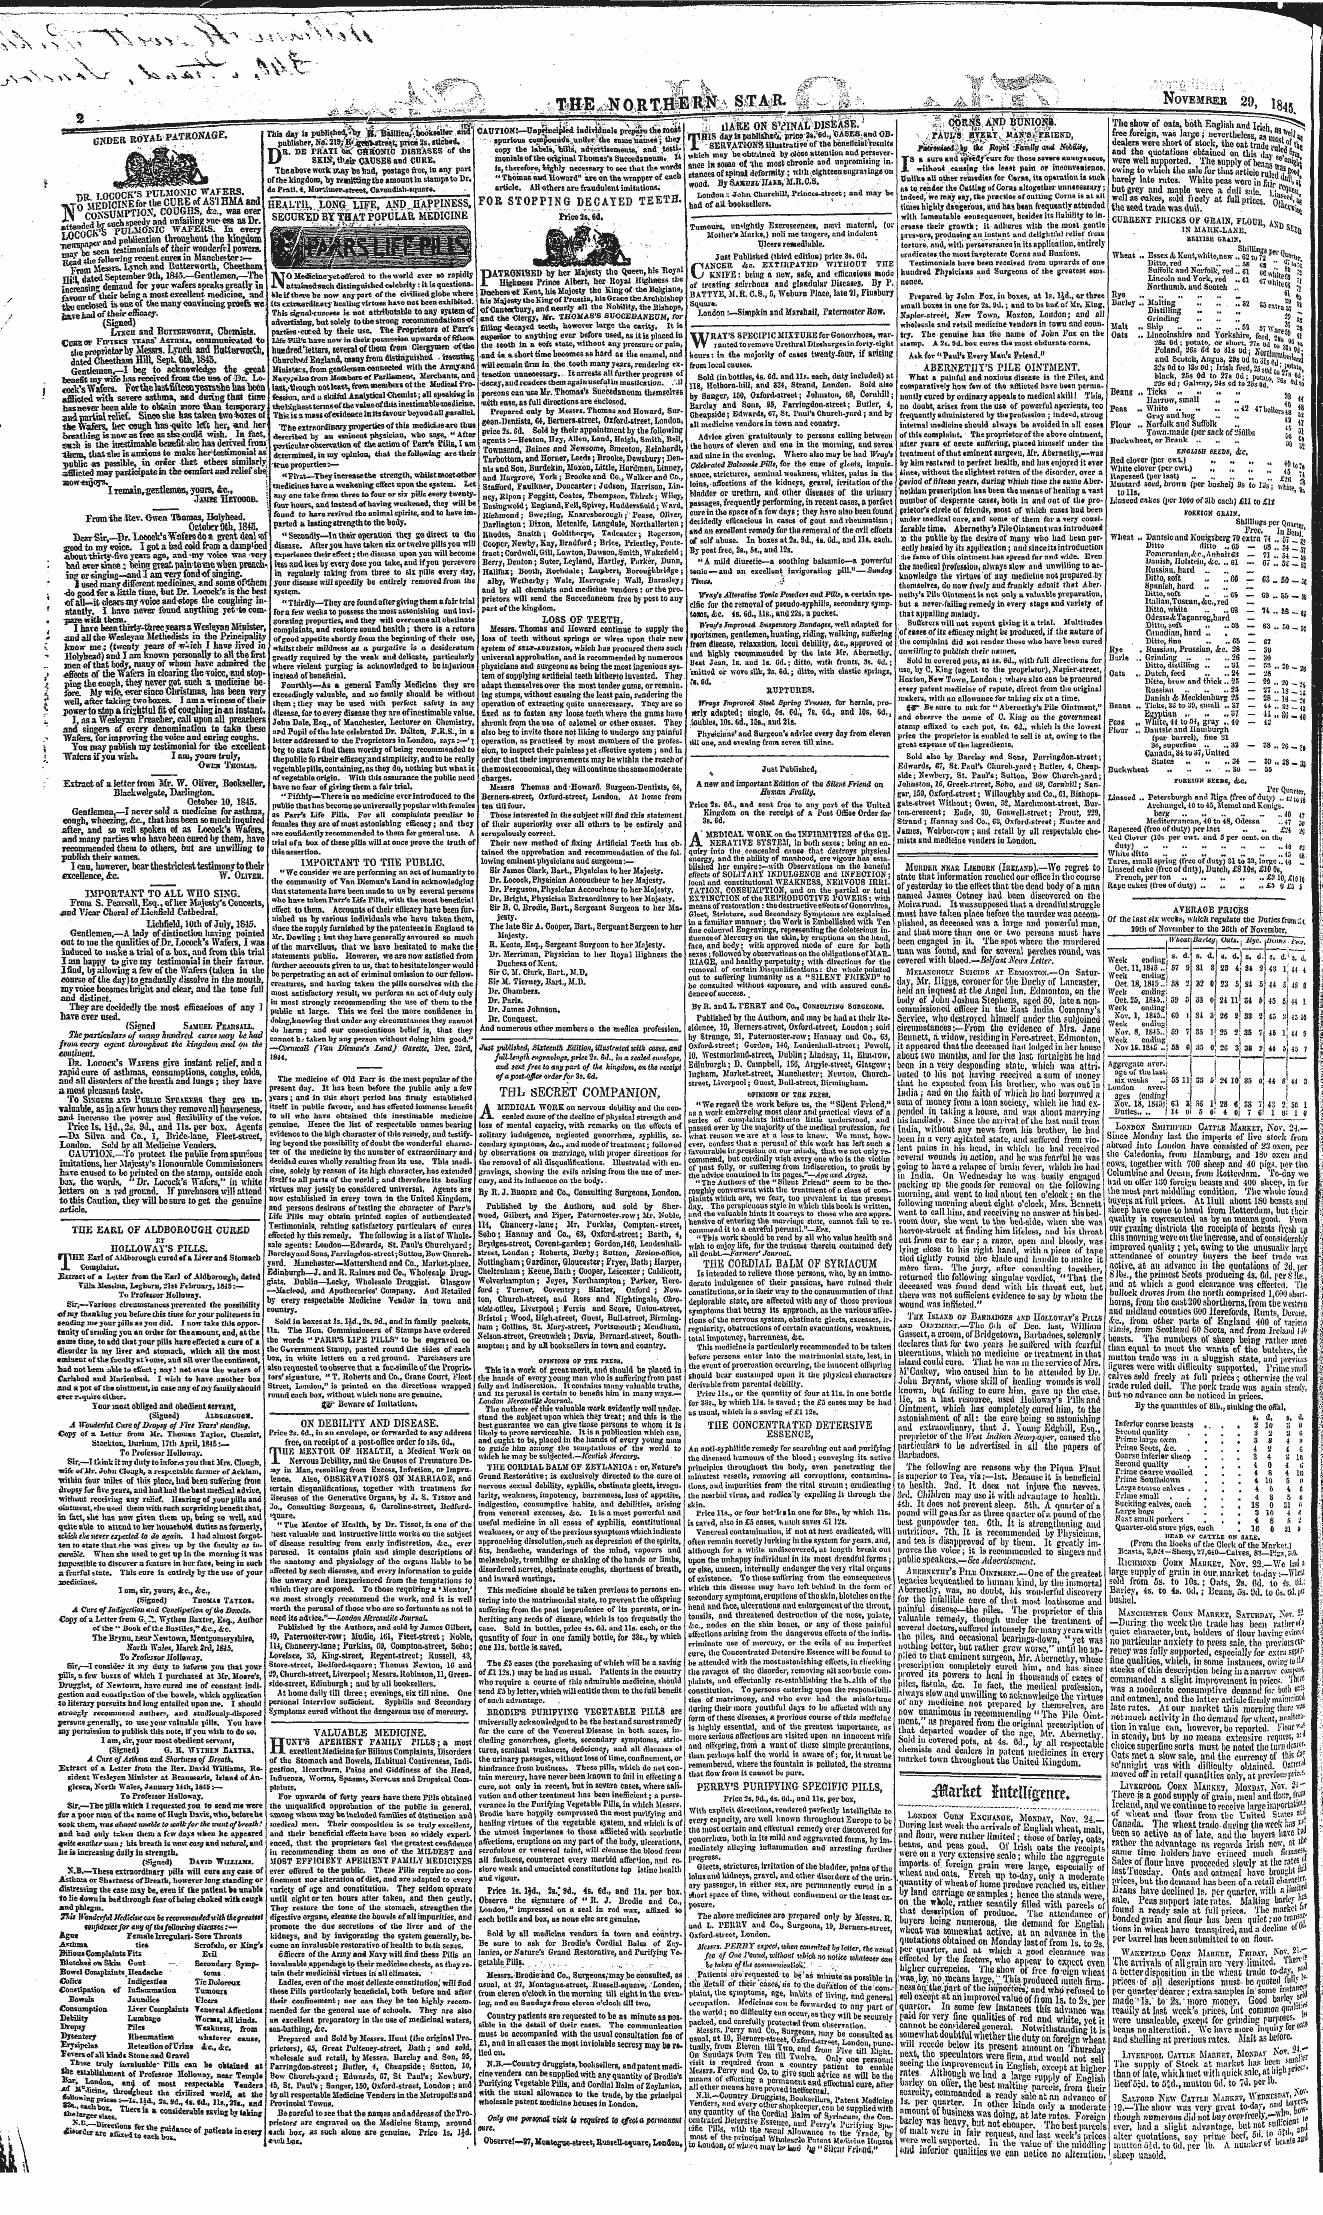 Northern Star (1837-1852): jS F Y, 4th edition - Ad00211